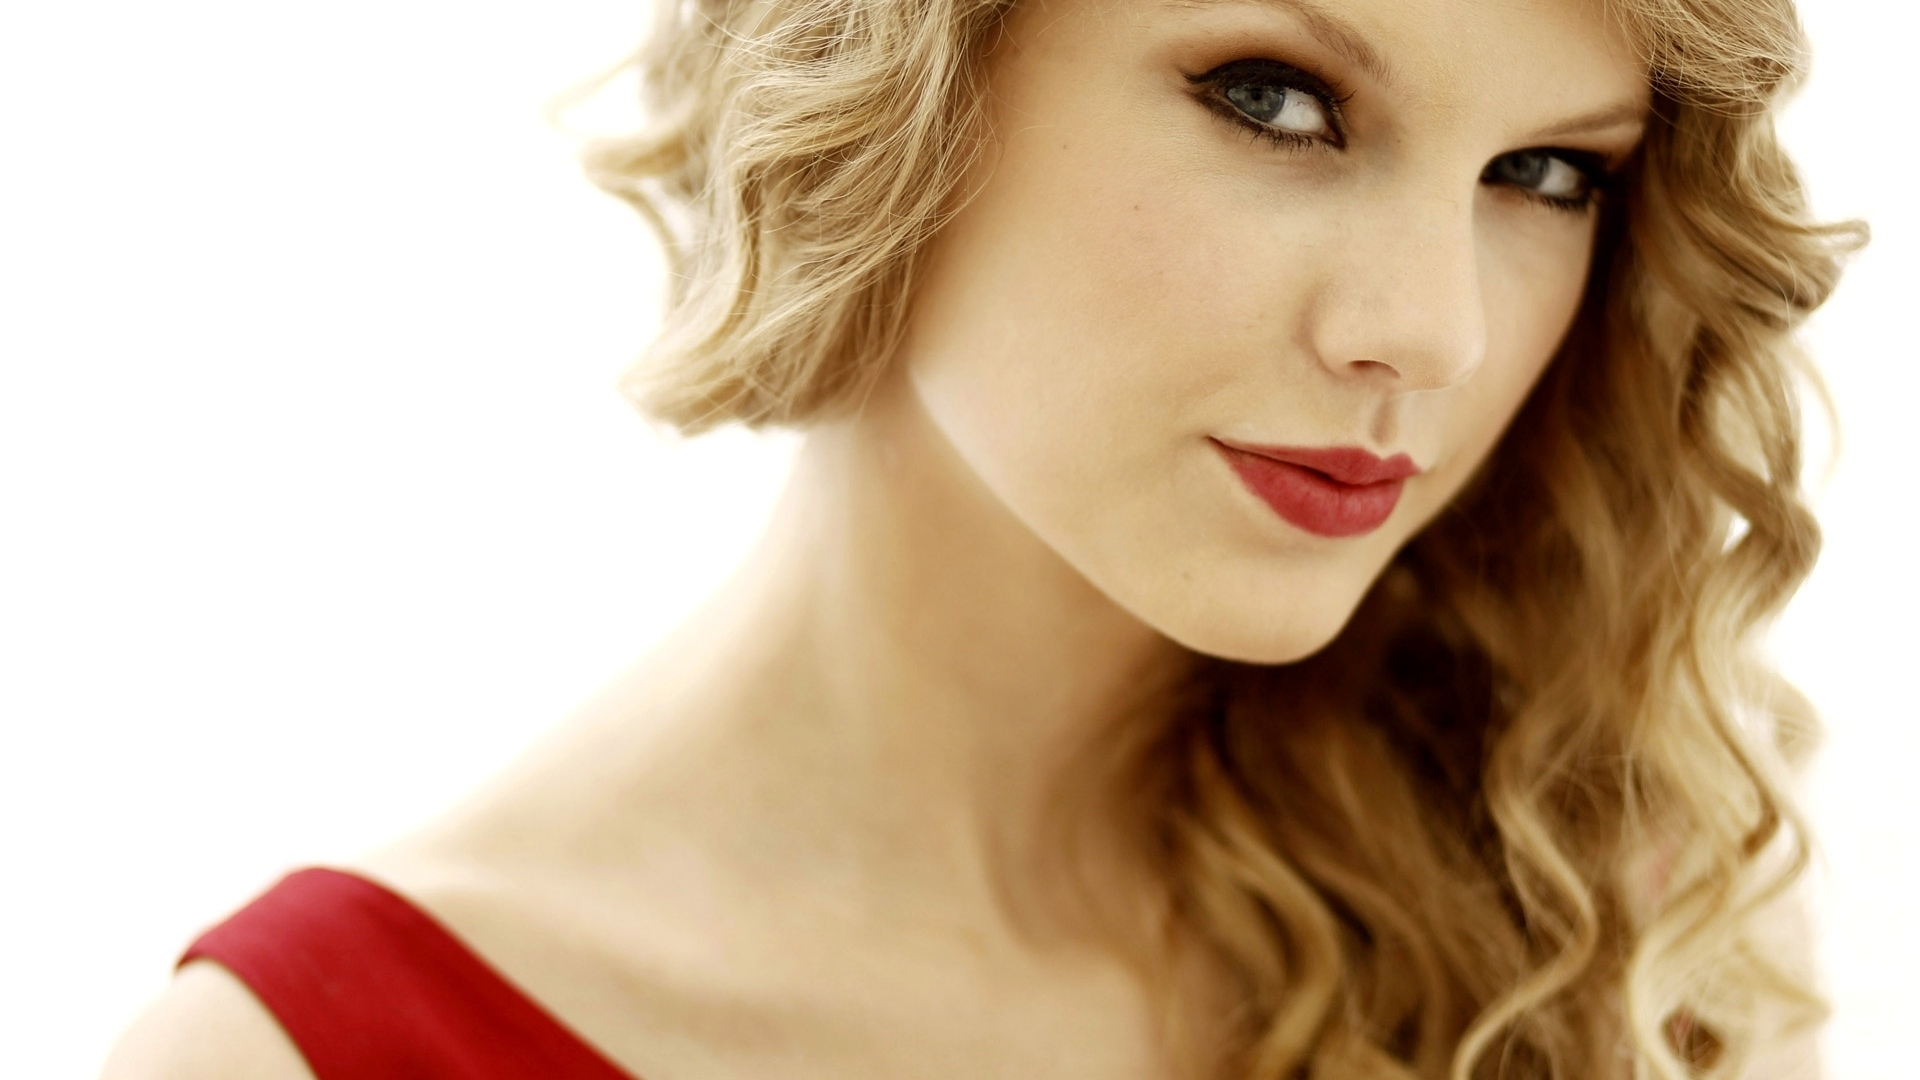 Taylor Swift HD Wallpaper 1080p On